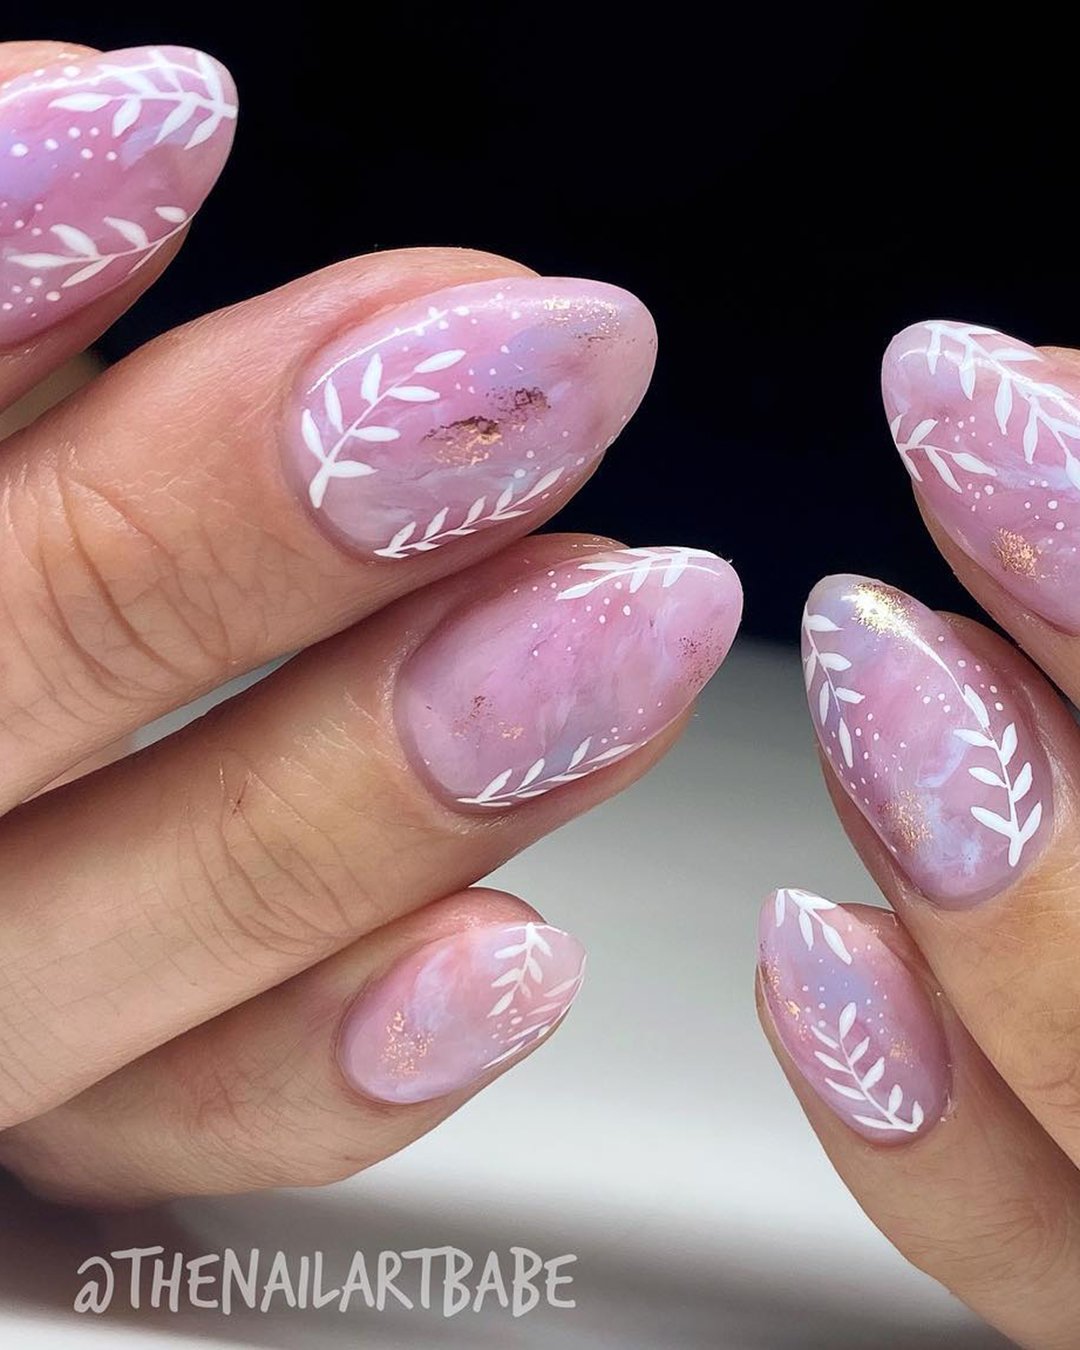 wedding nails design pink marble with white leaves thenailartbabe